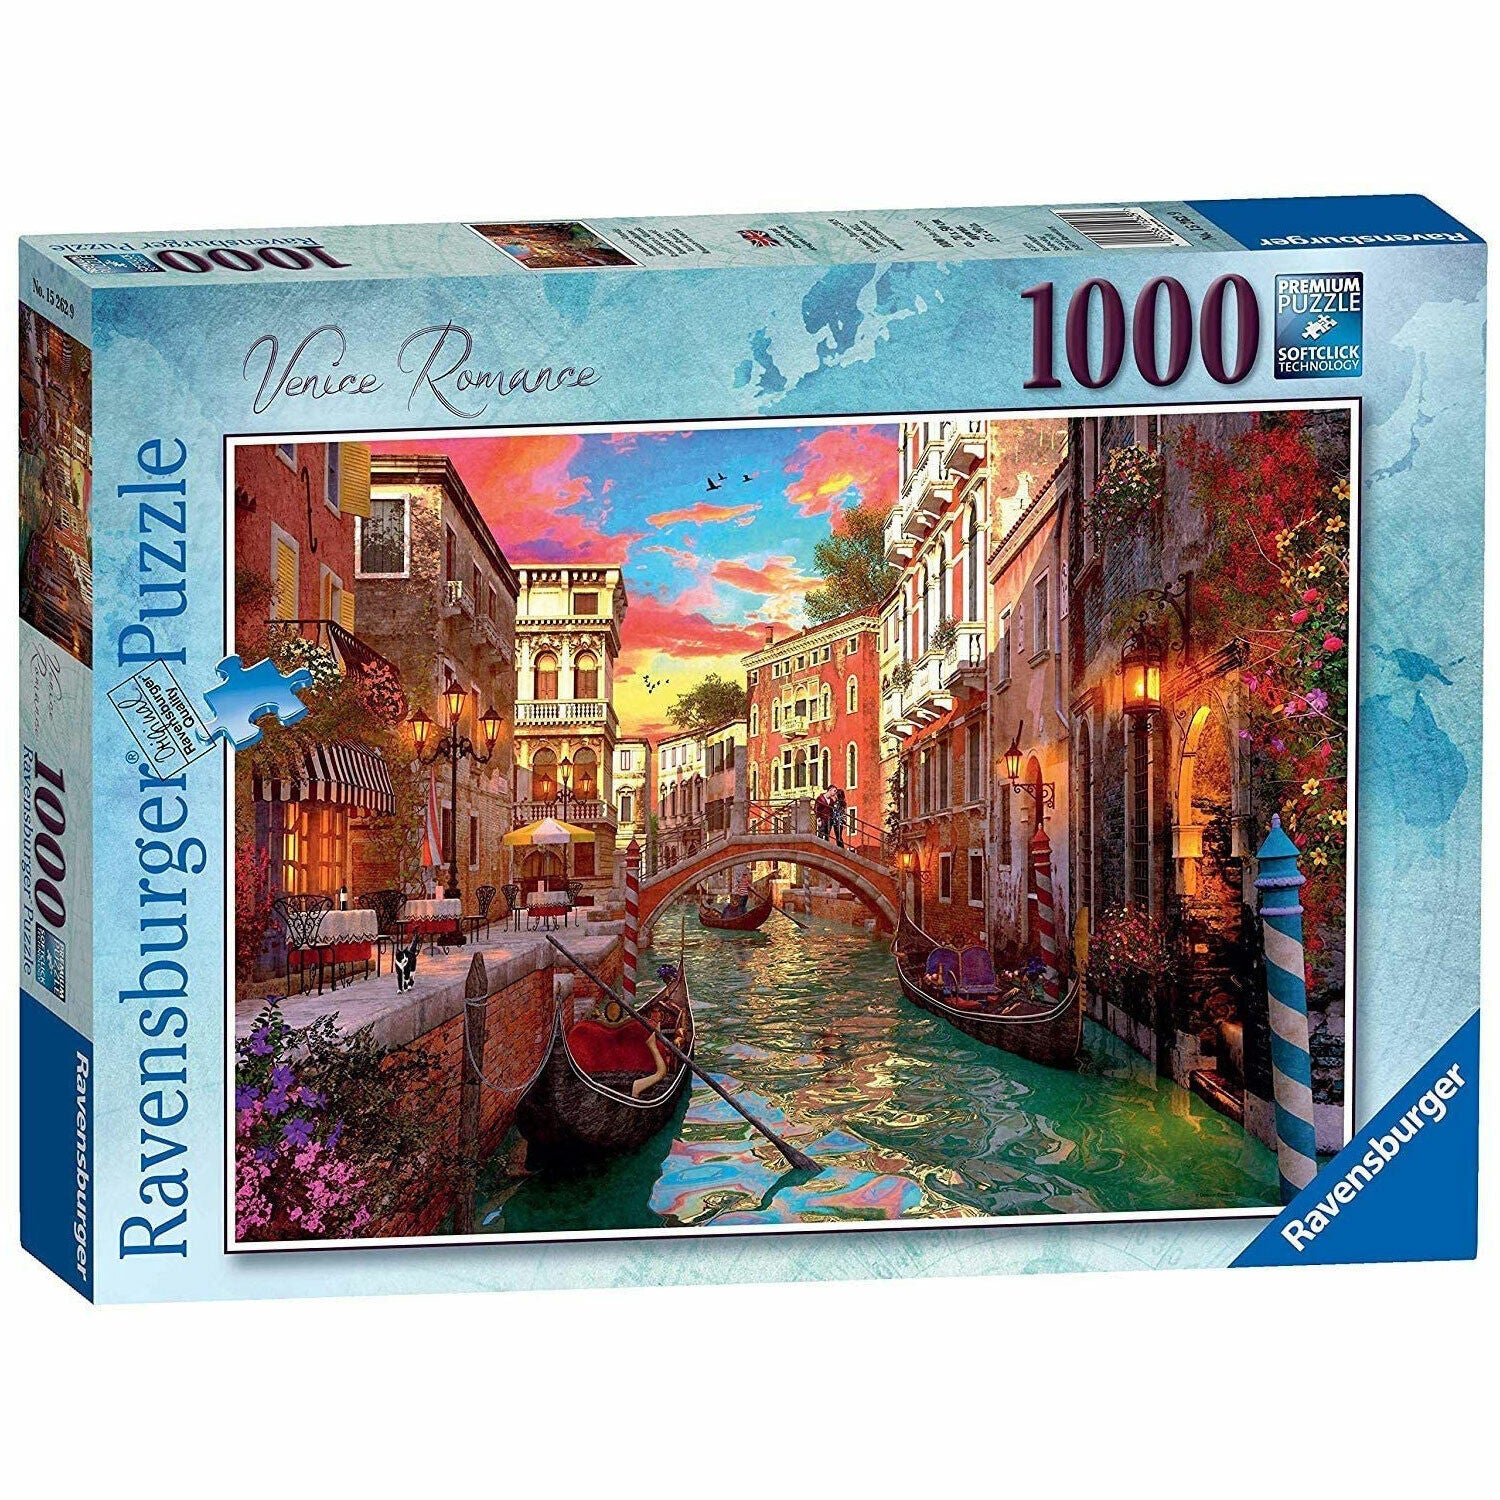 Ravensburger Venice Romance 1000 Piece Puzzle - New & Sealed